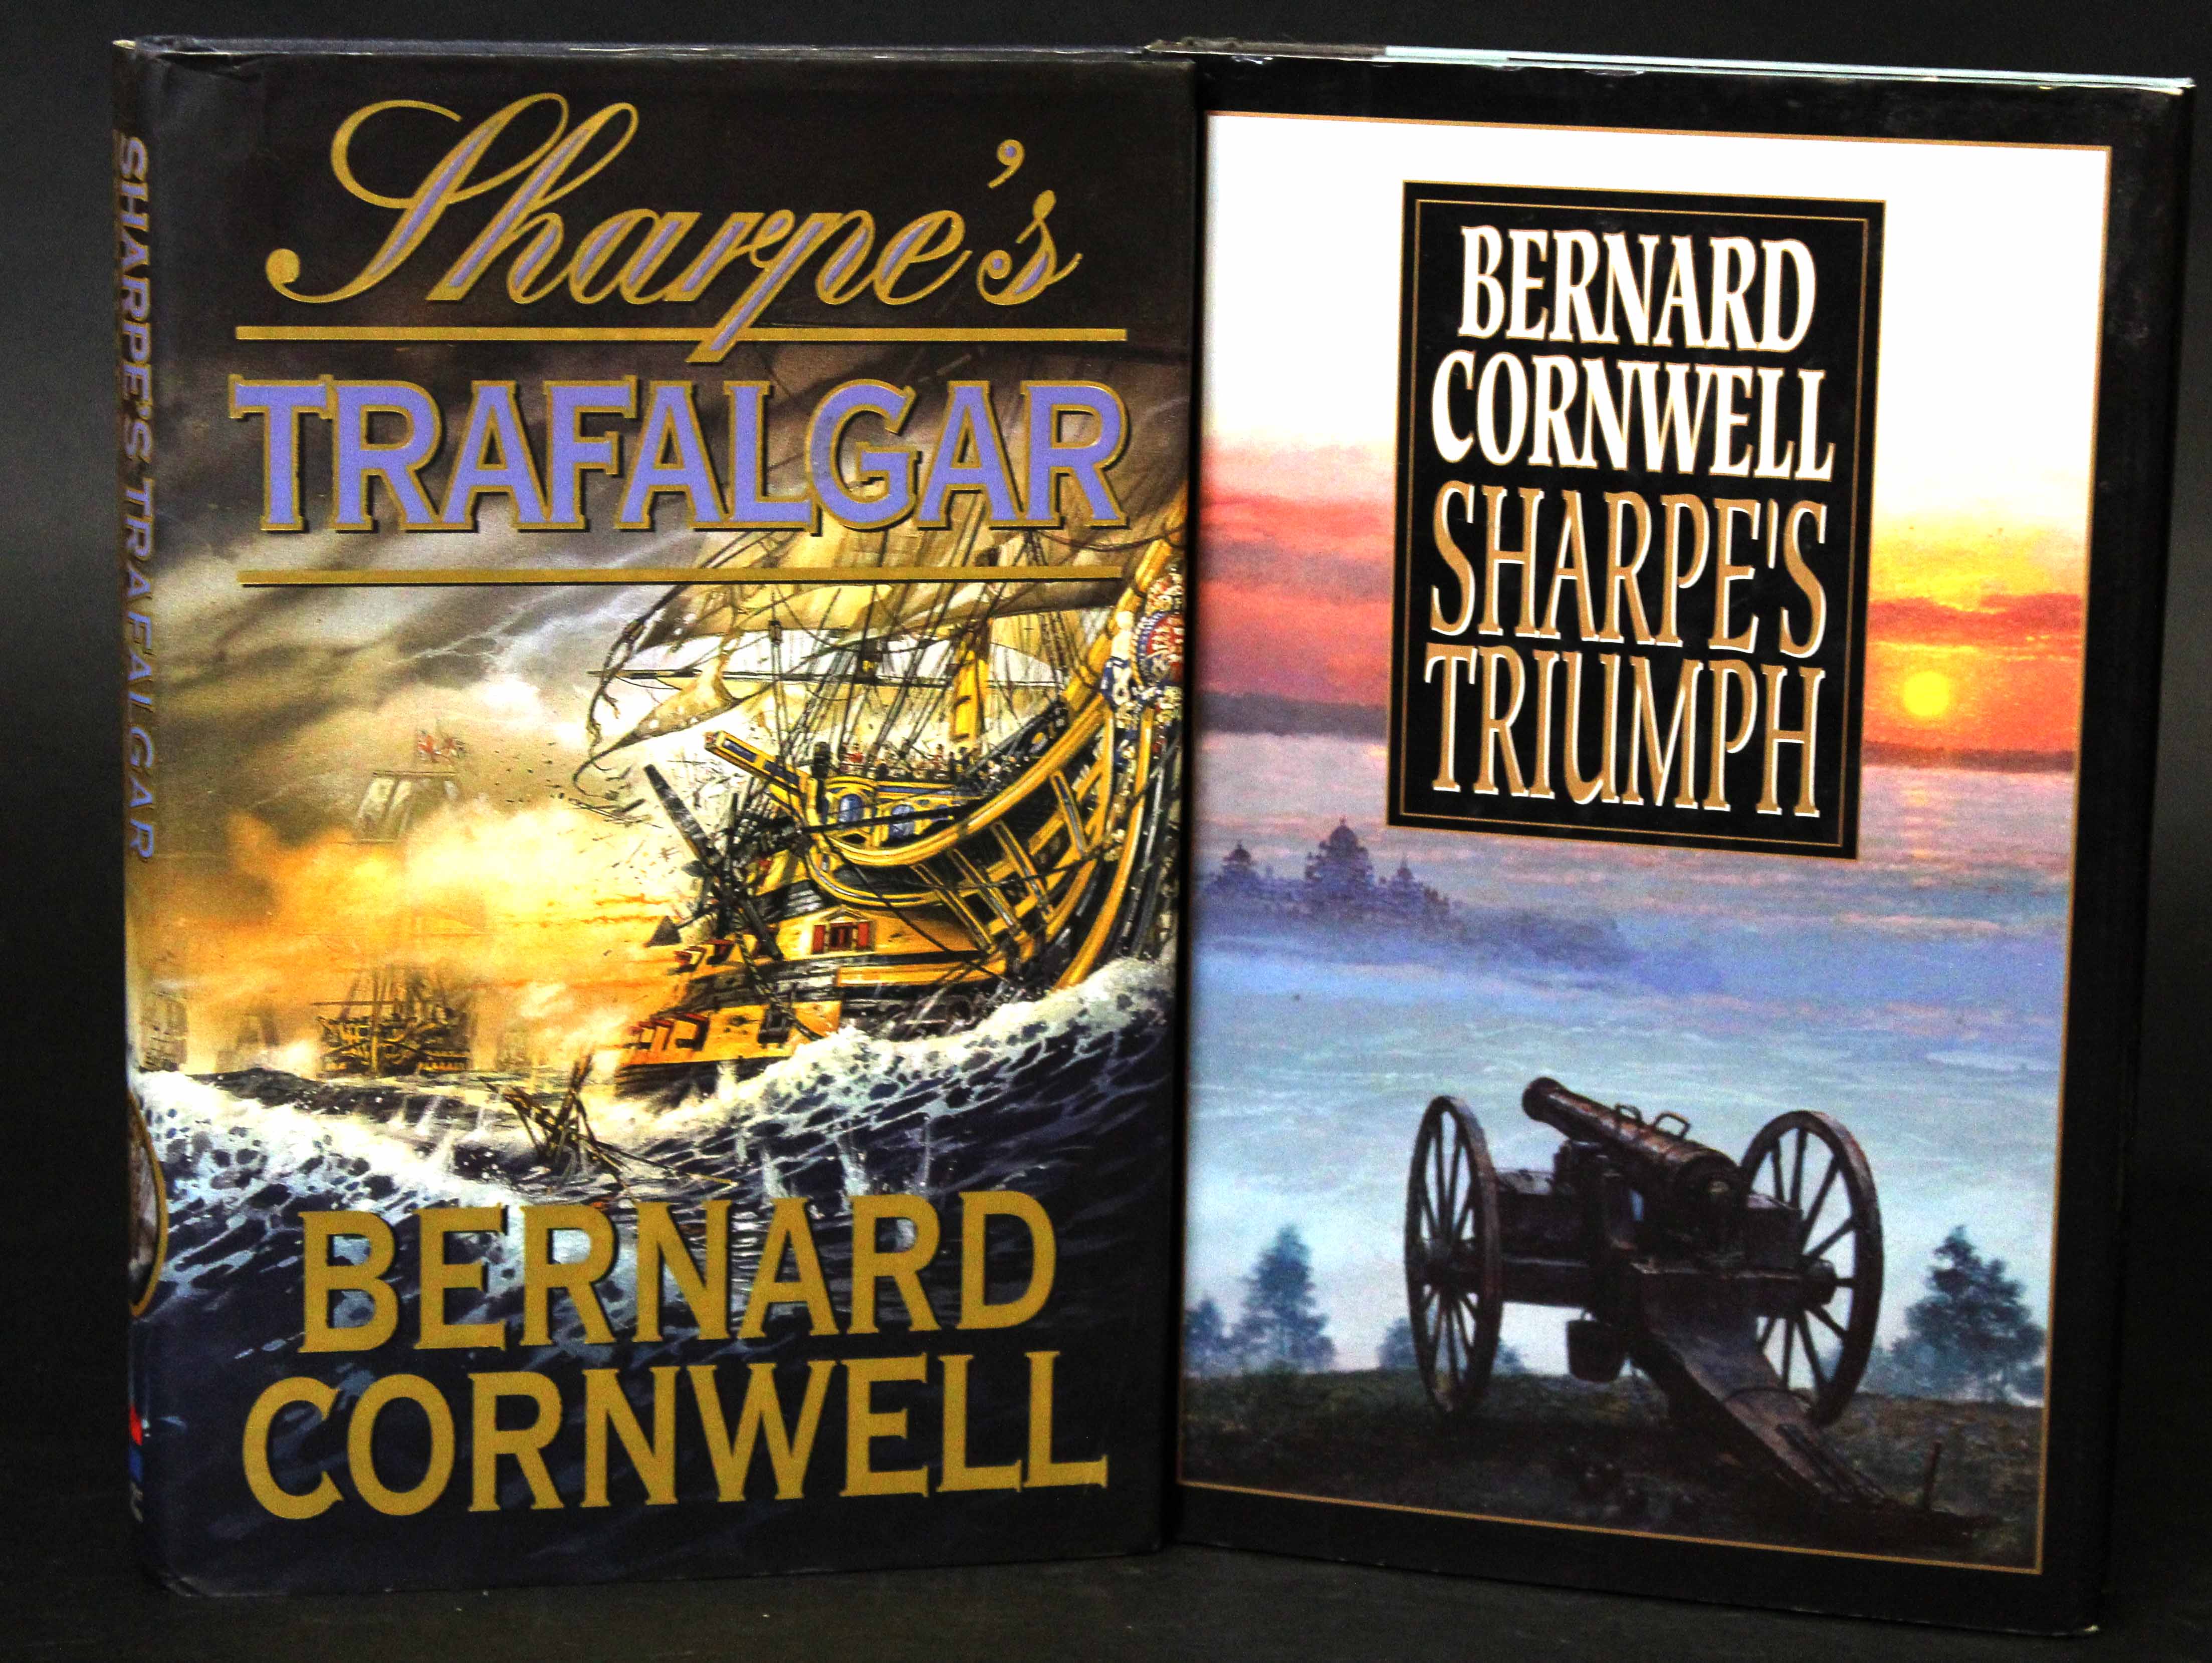 BERNARD CORNWELL: 2 titles: SHARPE'S TRIUMPH, New York [1999], 1st edition, signed, original cloth